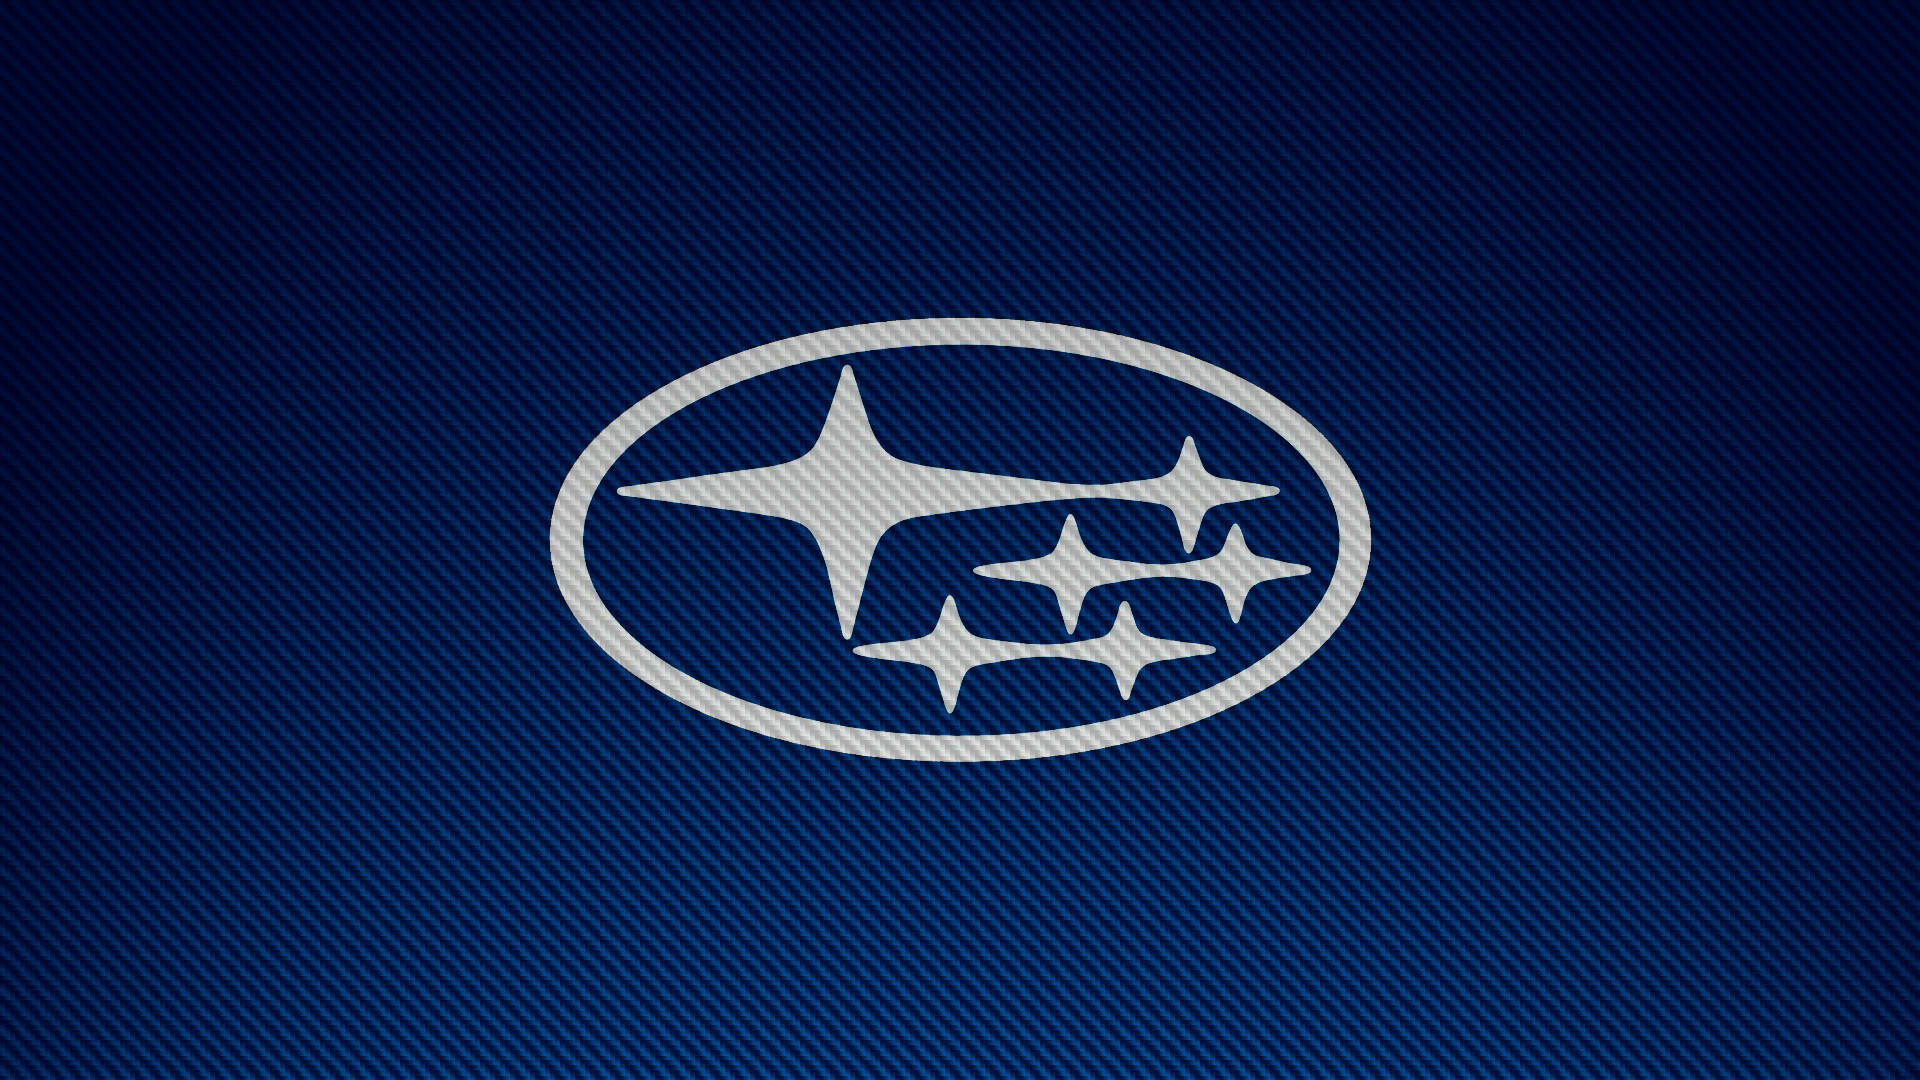 Subaru Logo In Textured Blue